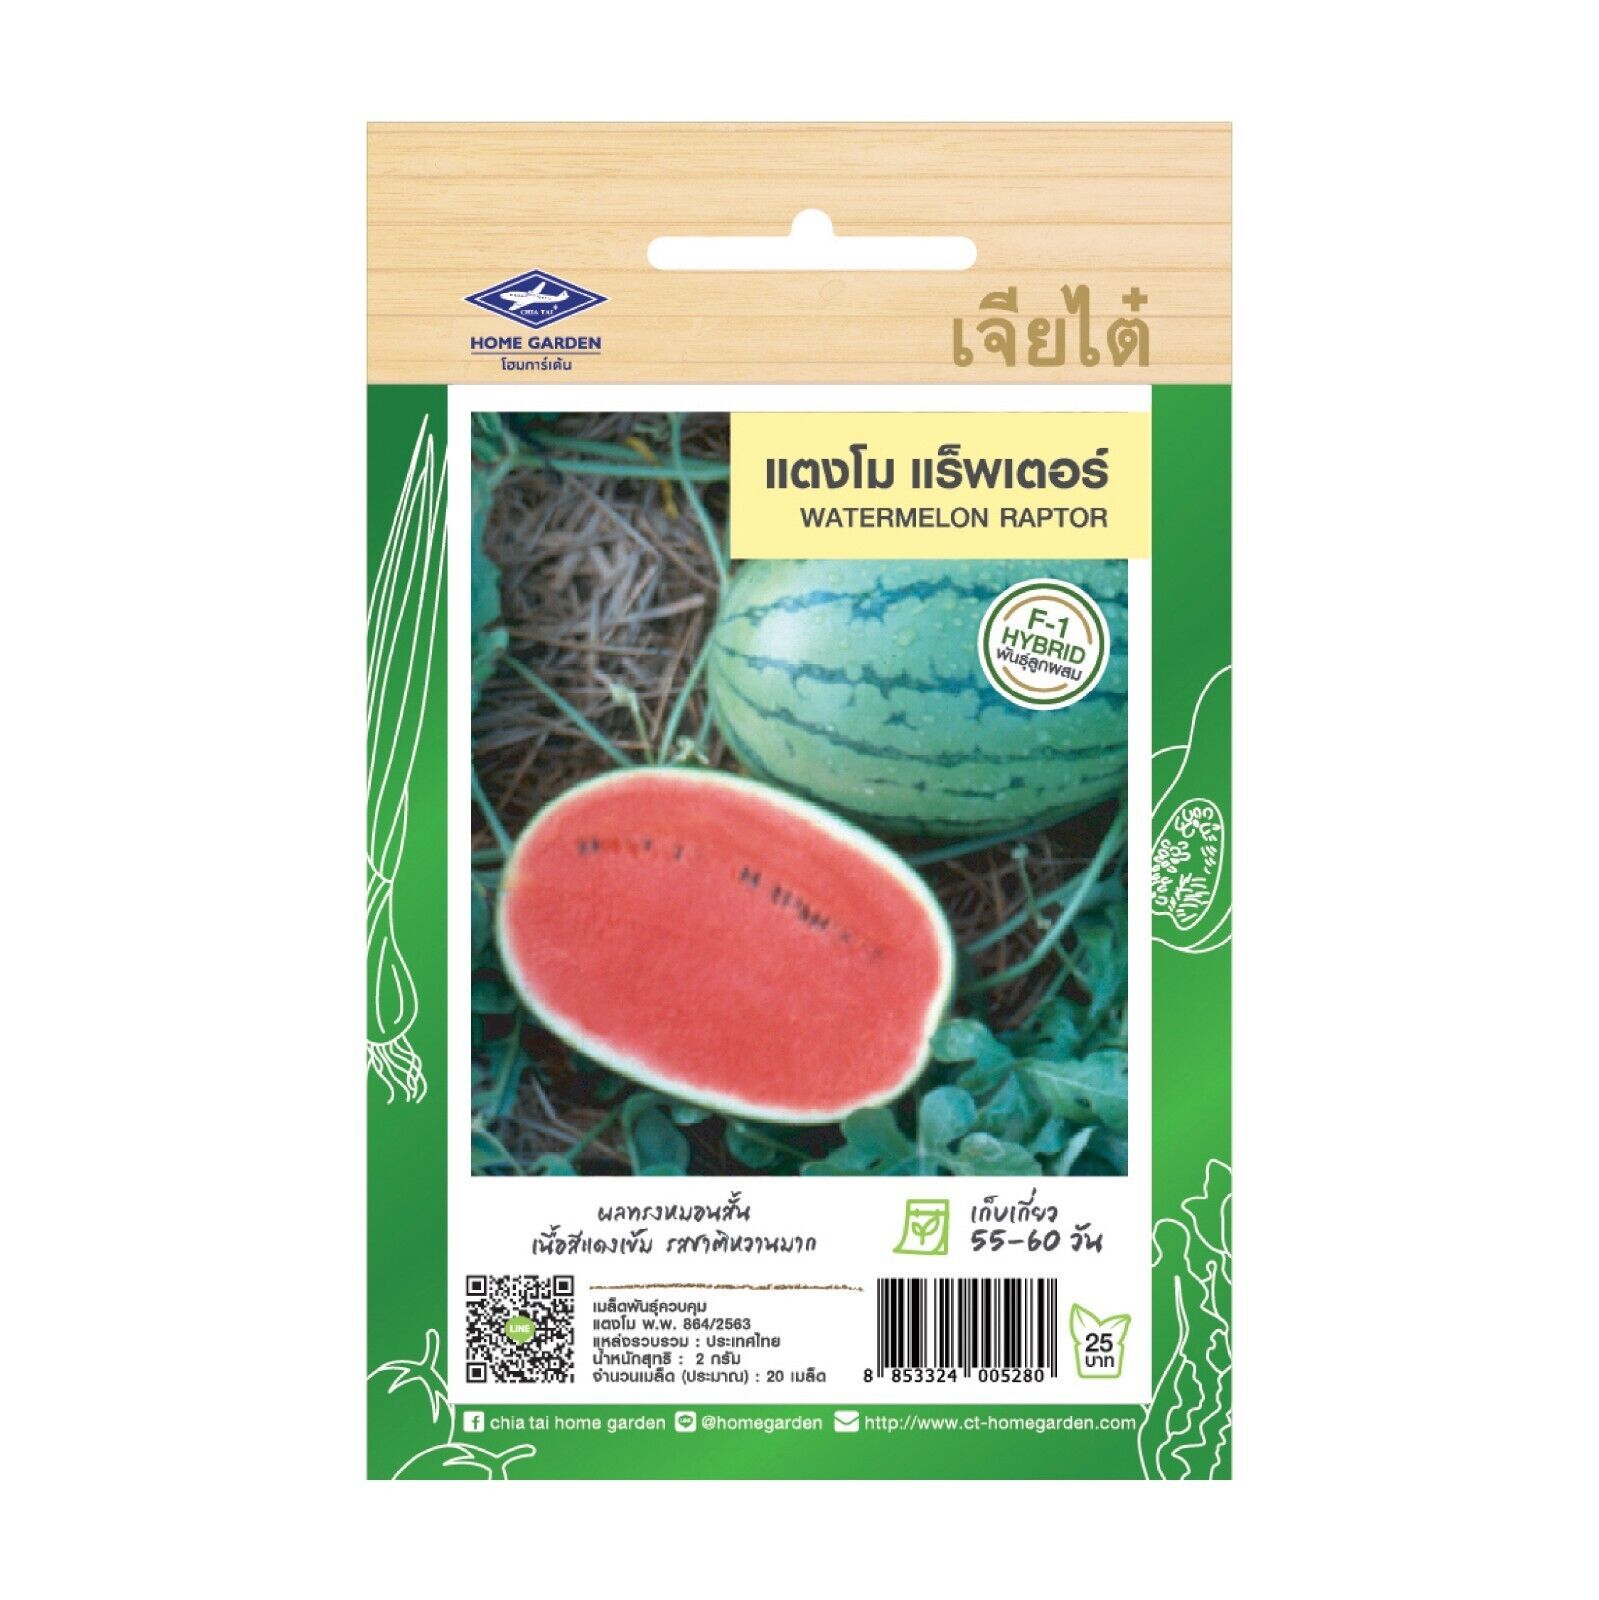 Watermelon Raptor Seeds Home Garden Asian Fresh Vegetable The Best Thai Seeds - $7.99